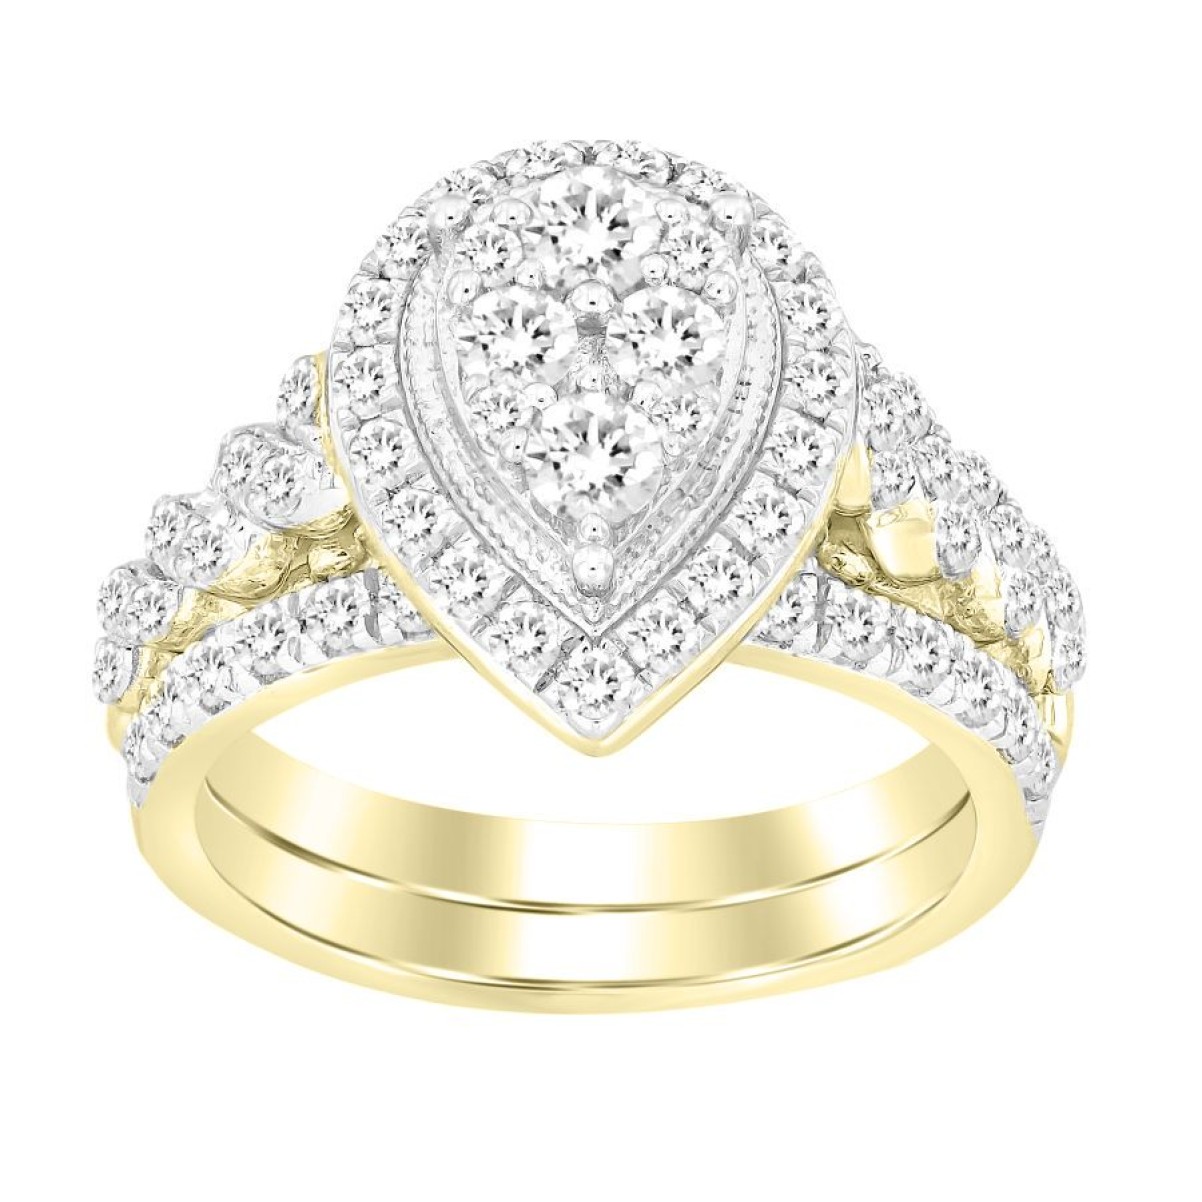 BRIDAL RING SET 1.50CT ROUND DIAMOND 14K YELLOW GOLD